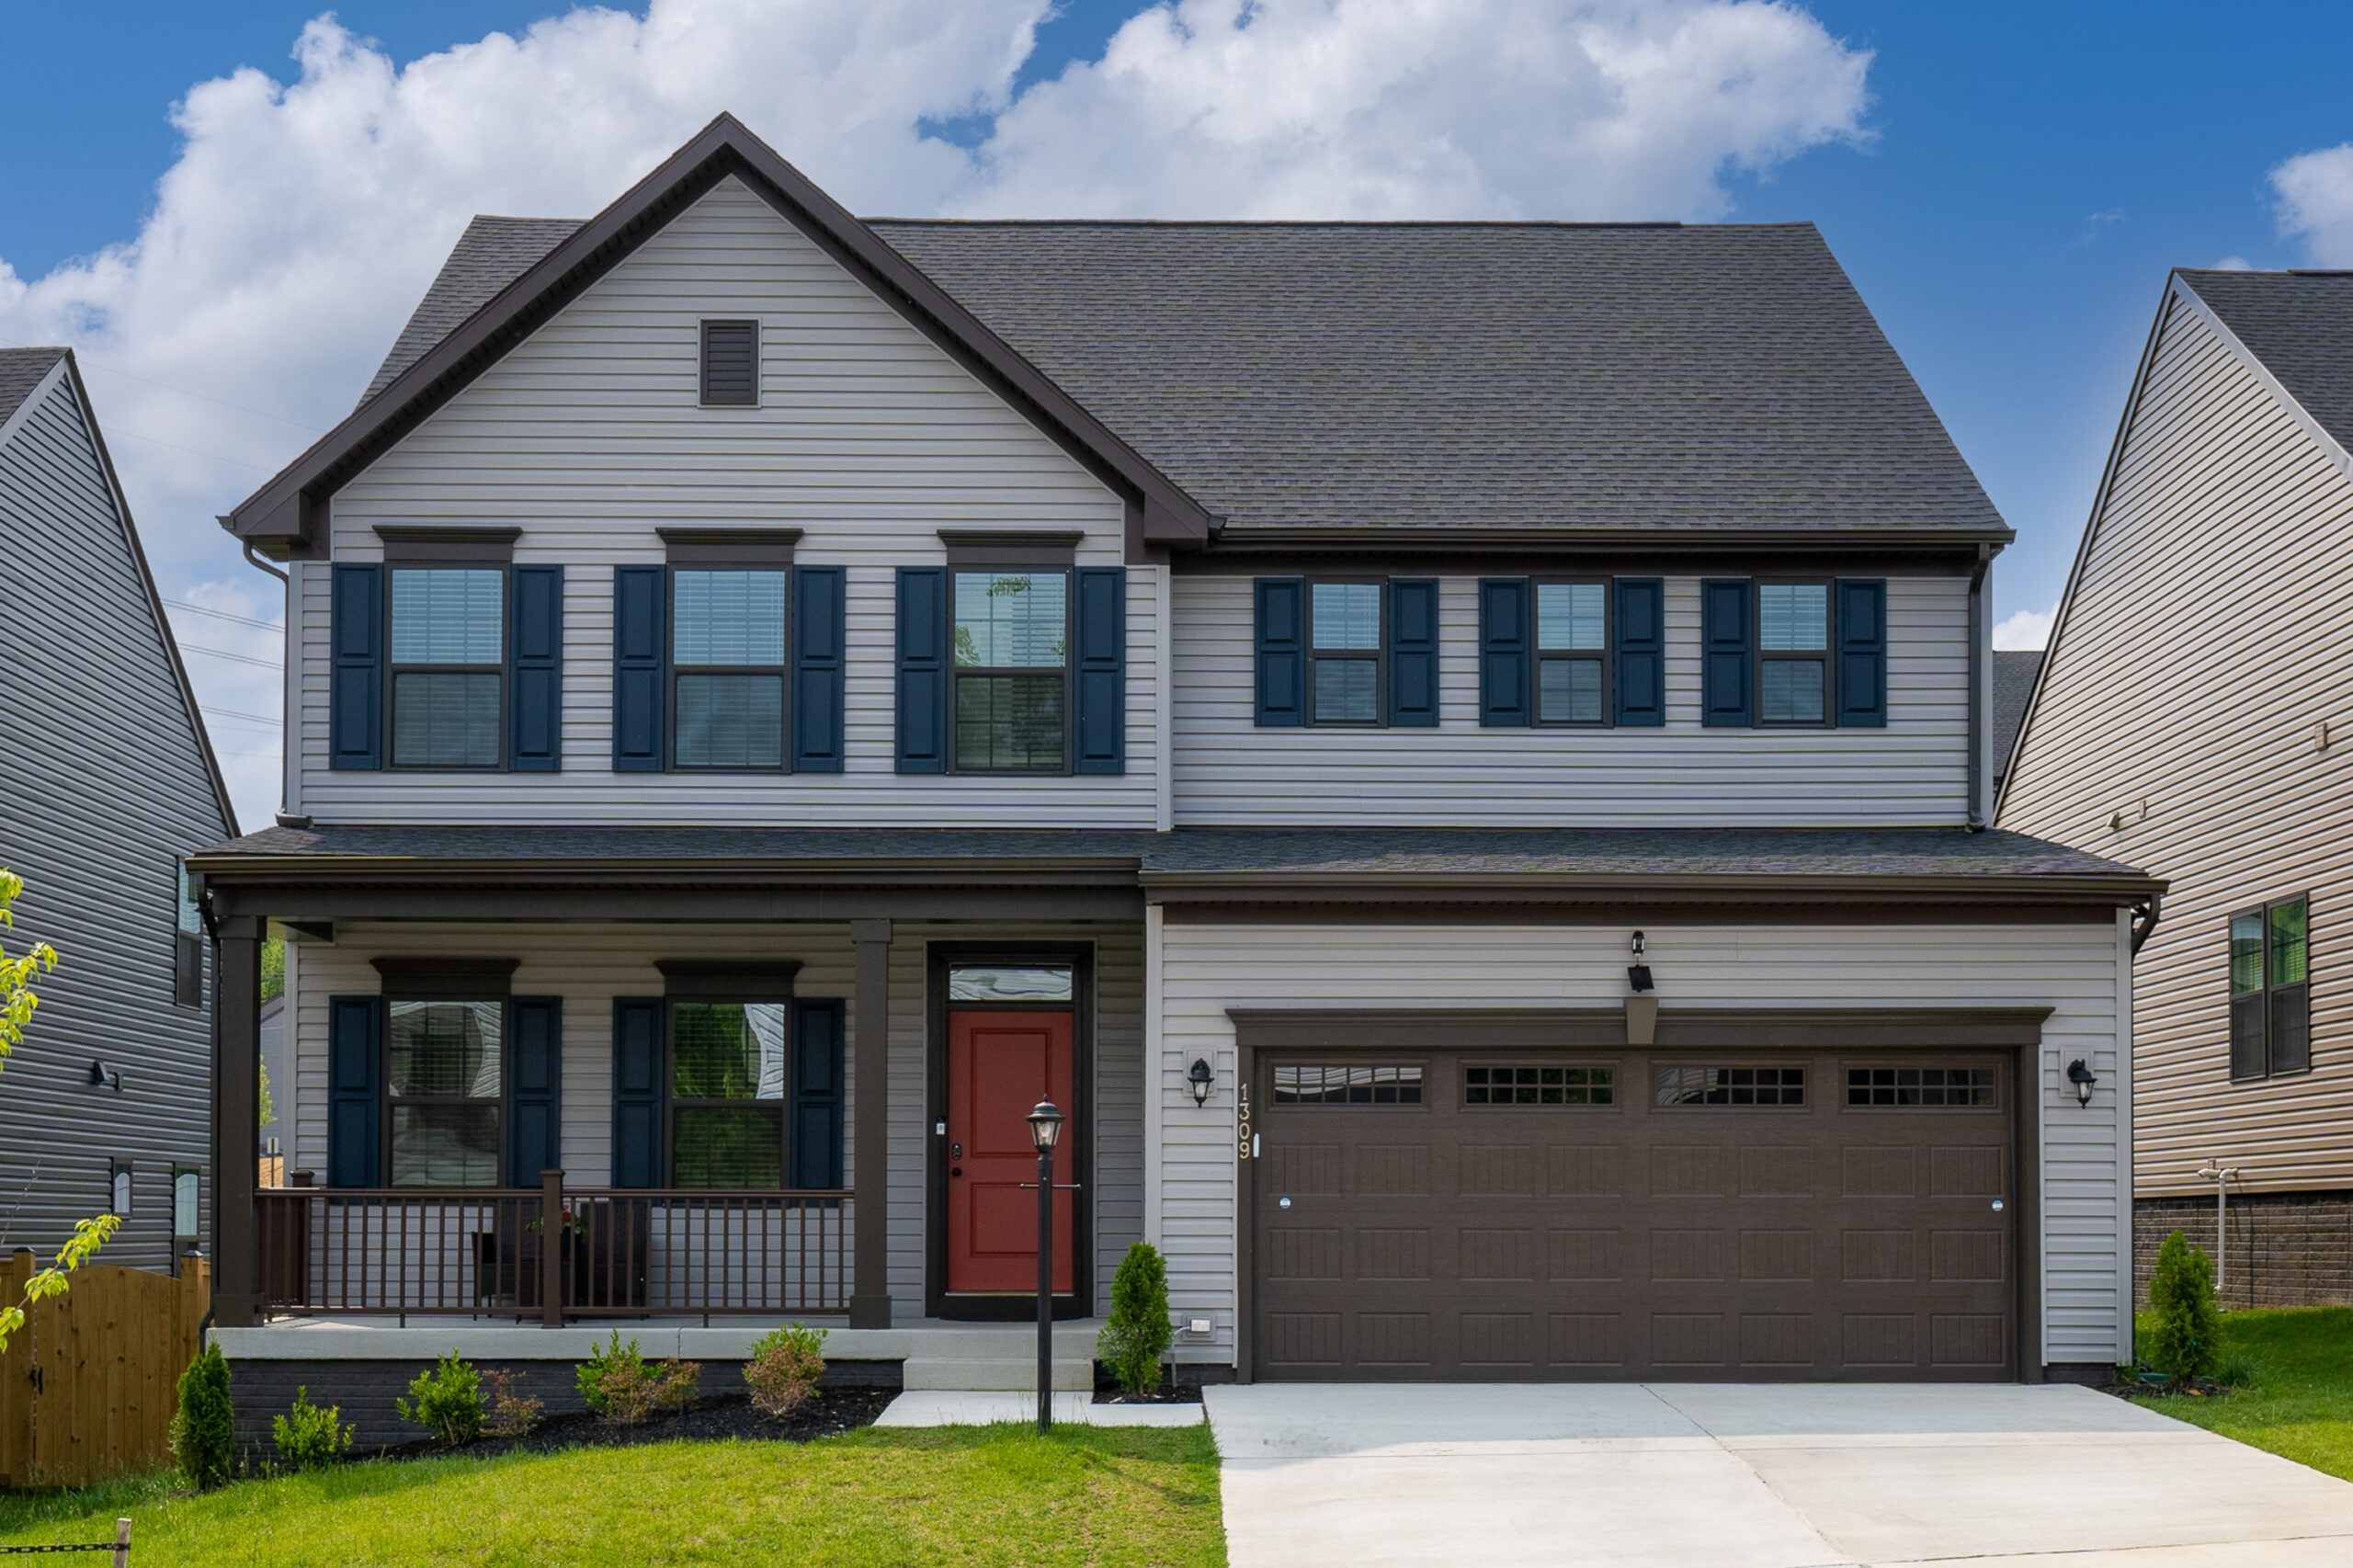 Home for Sale in Fredericksburg VA | City View Lane